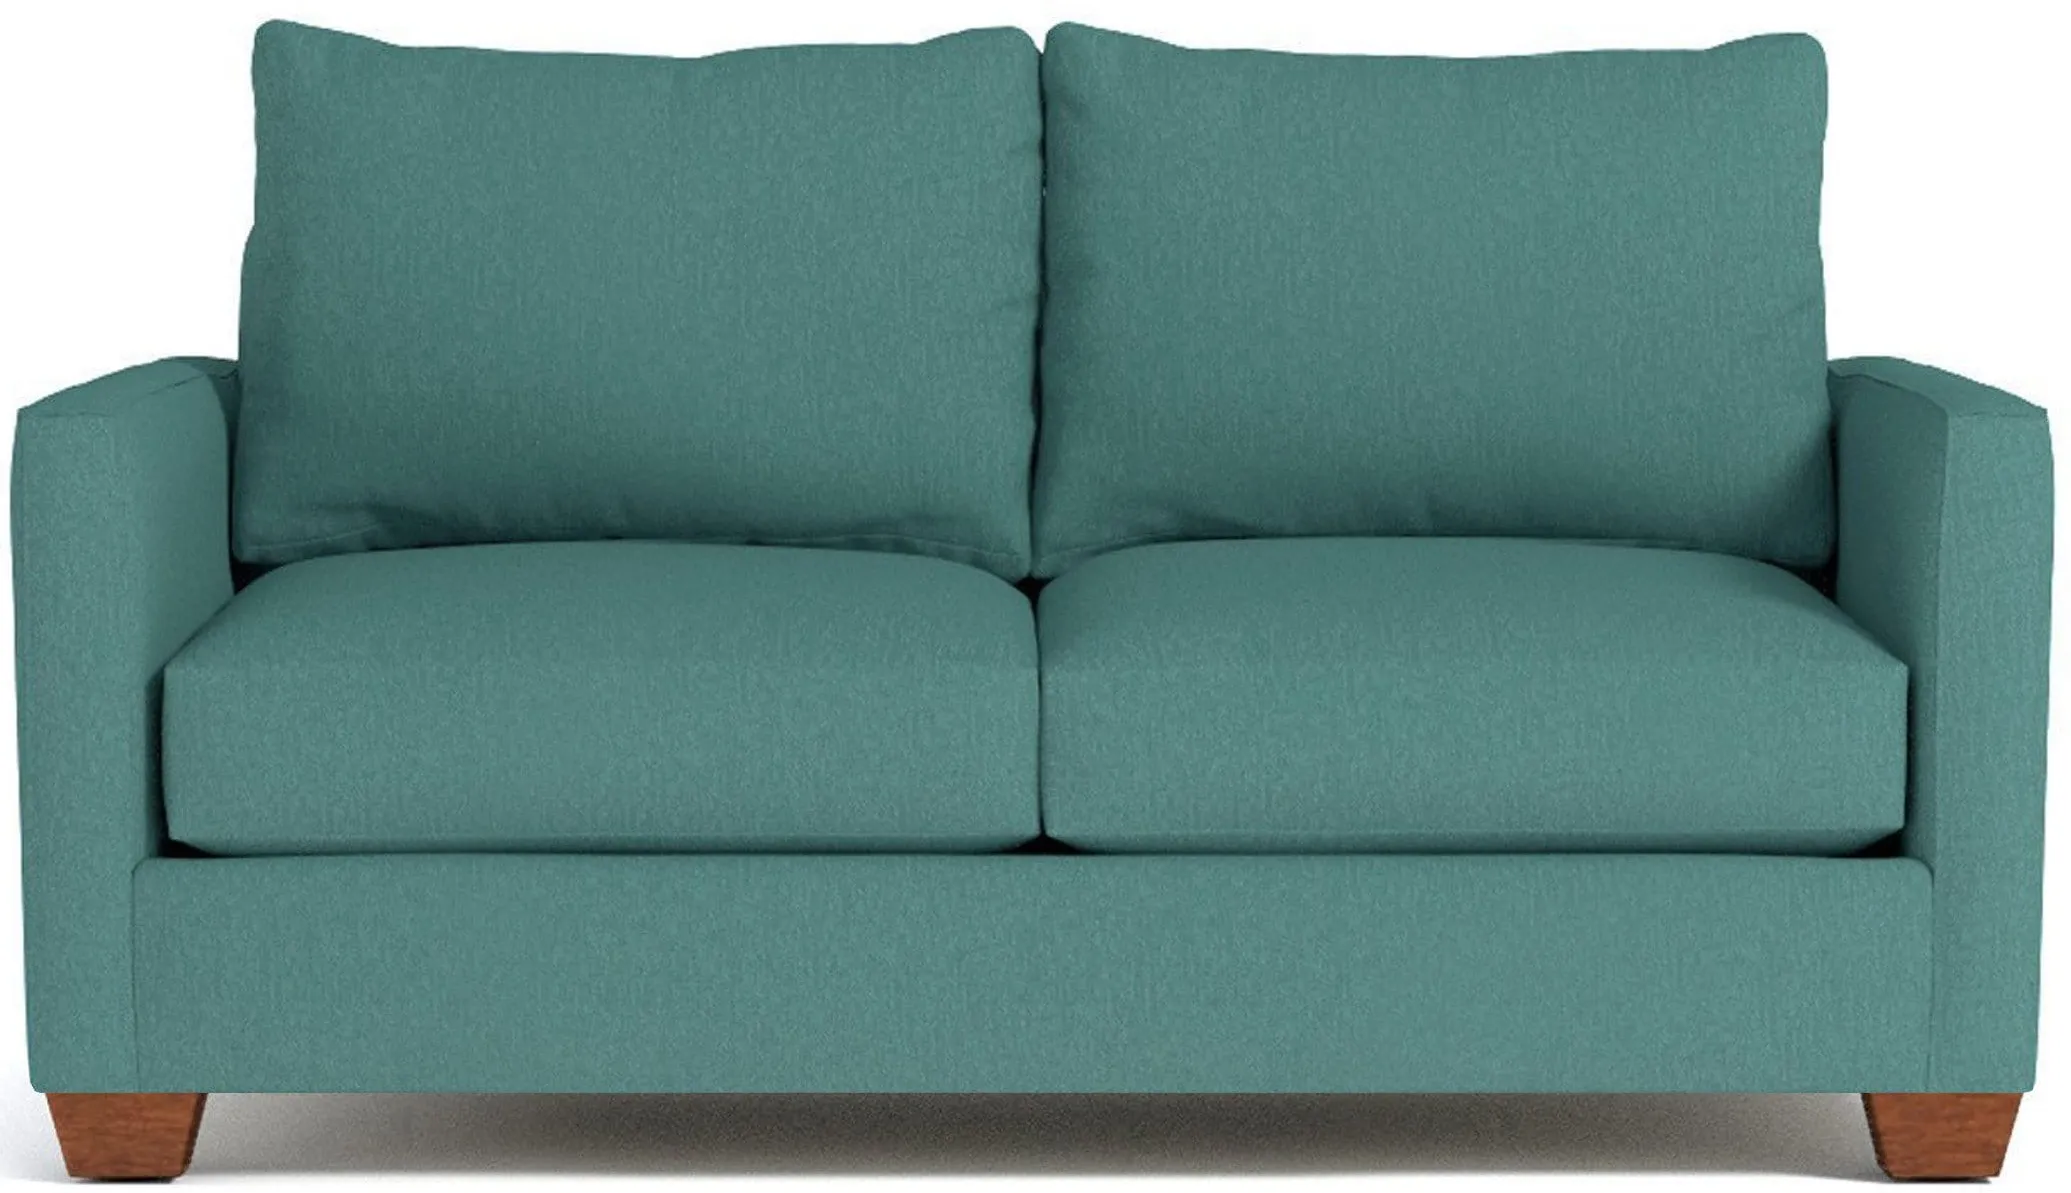 Tuxedo Apartment Size Sleeper Sofa Bed:: Leg Finish: Pecan / Sleeper Option: Memory Foam Mattress